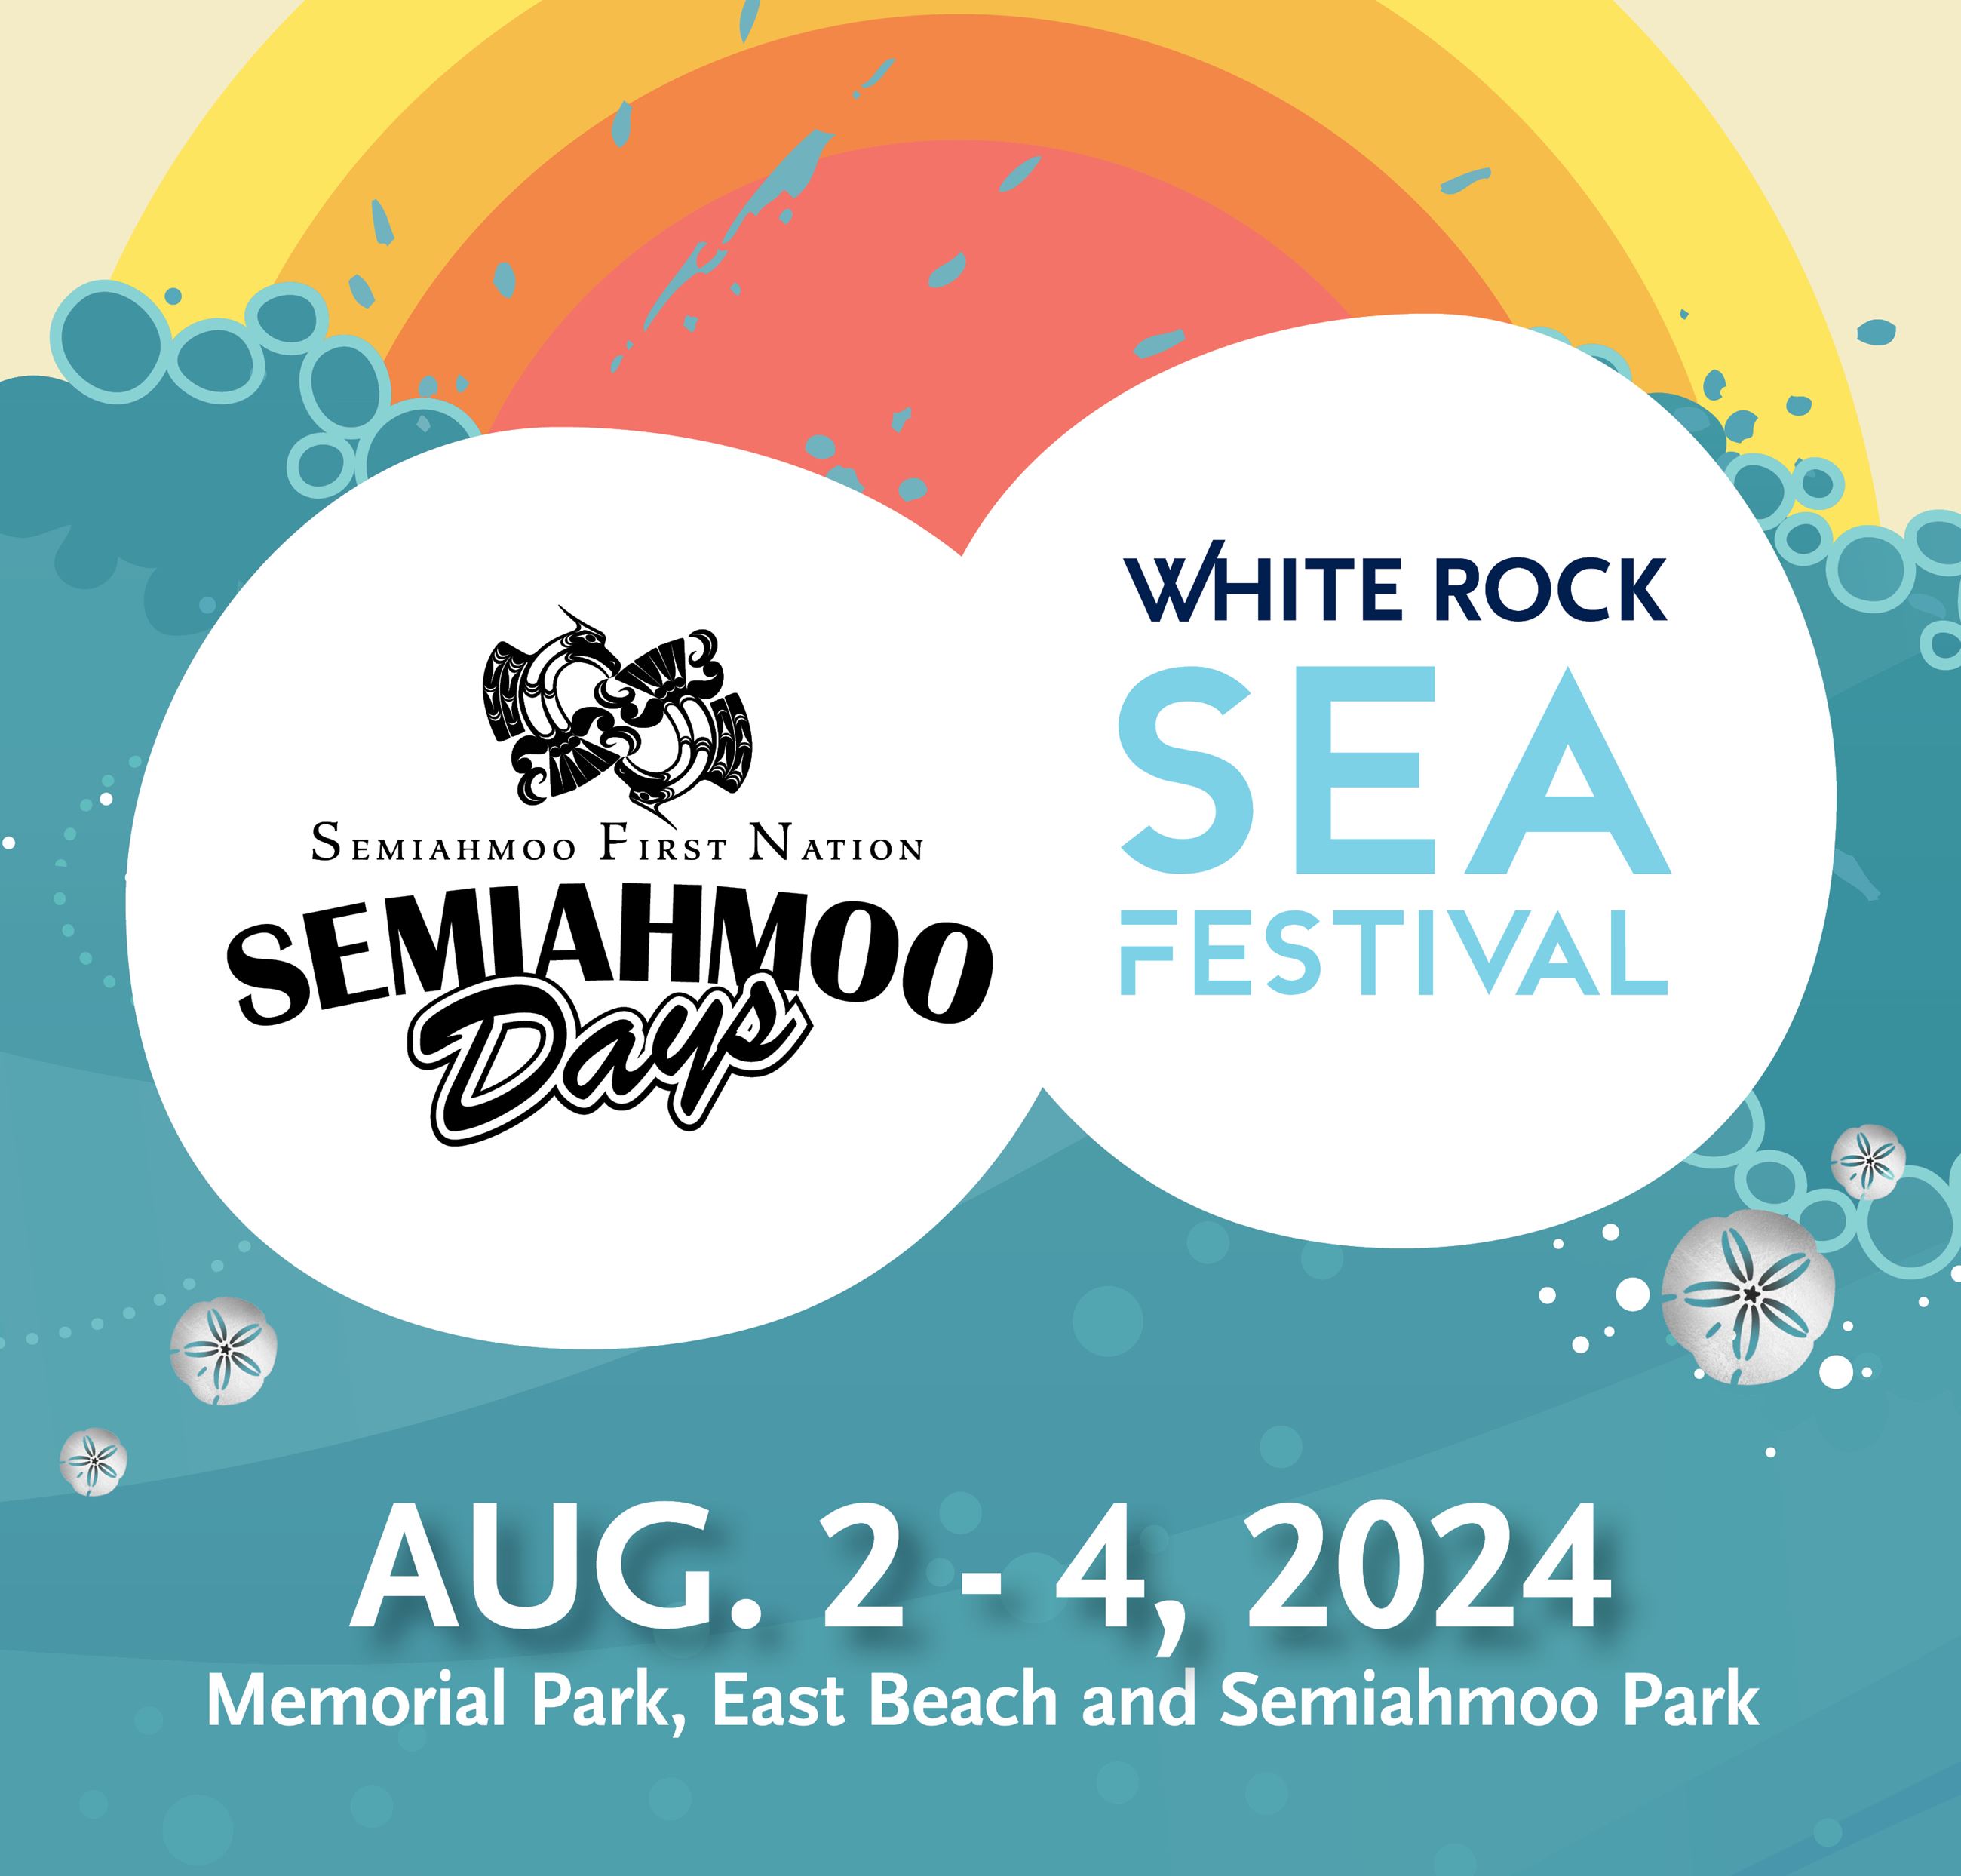 White Rock Sea Festival & Semiahmoo Days, Aug. 2 - 4, 2024